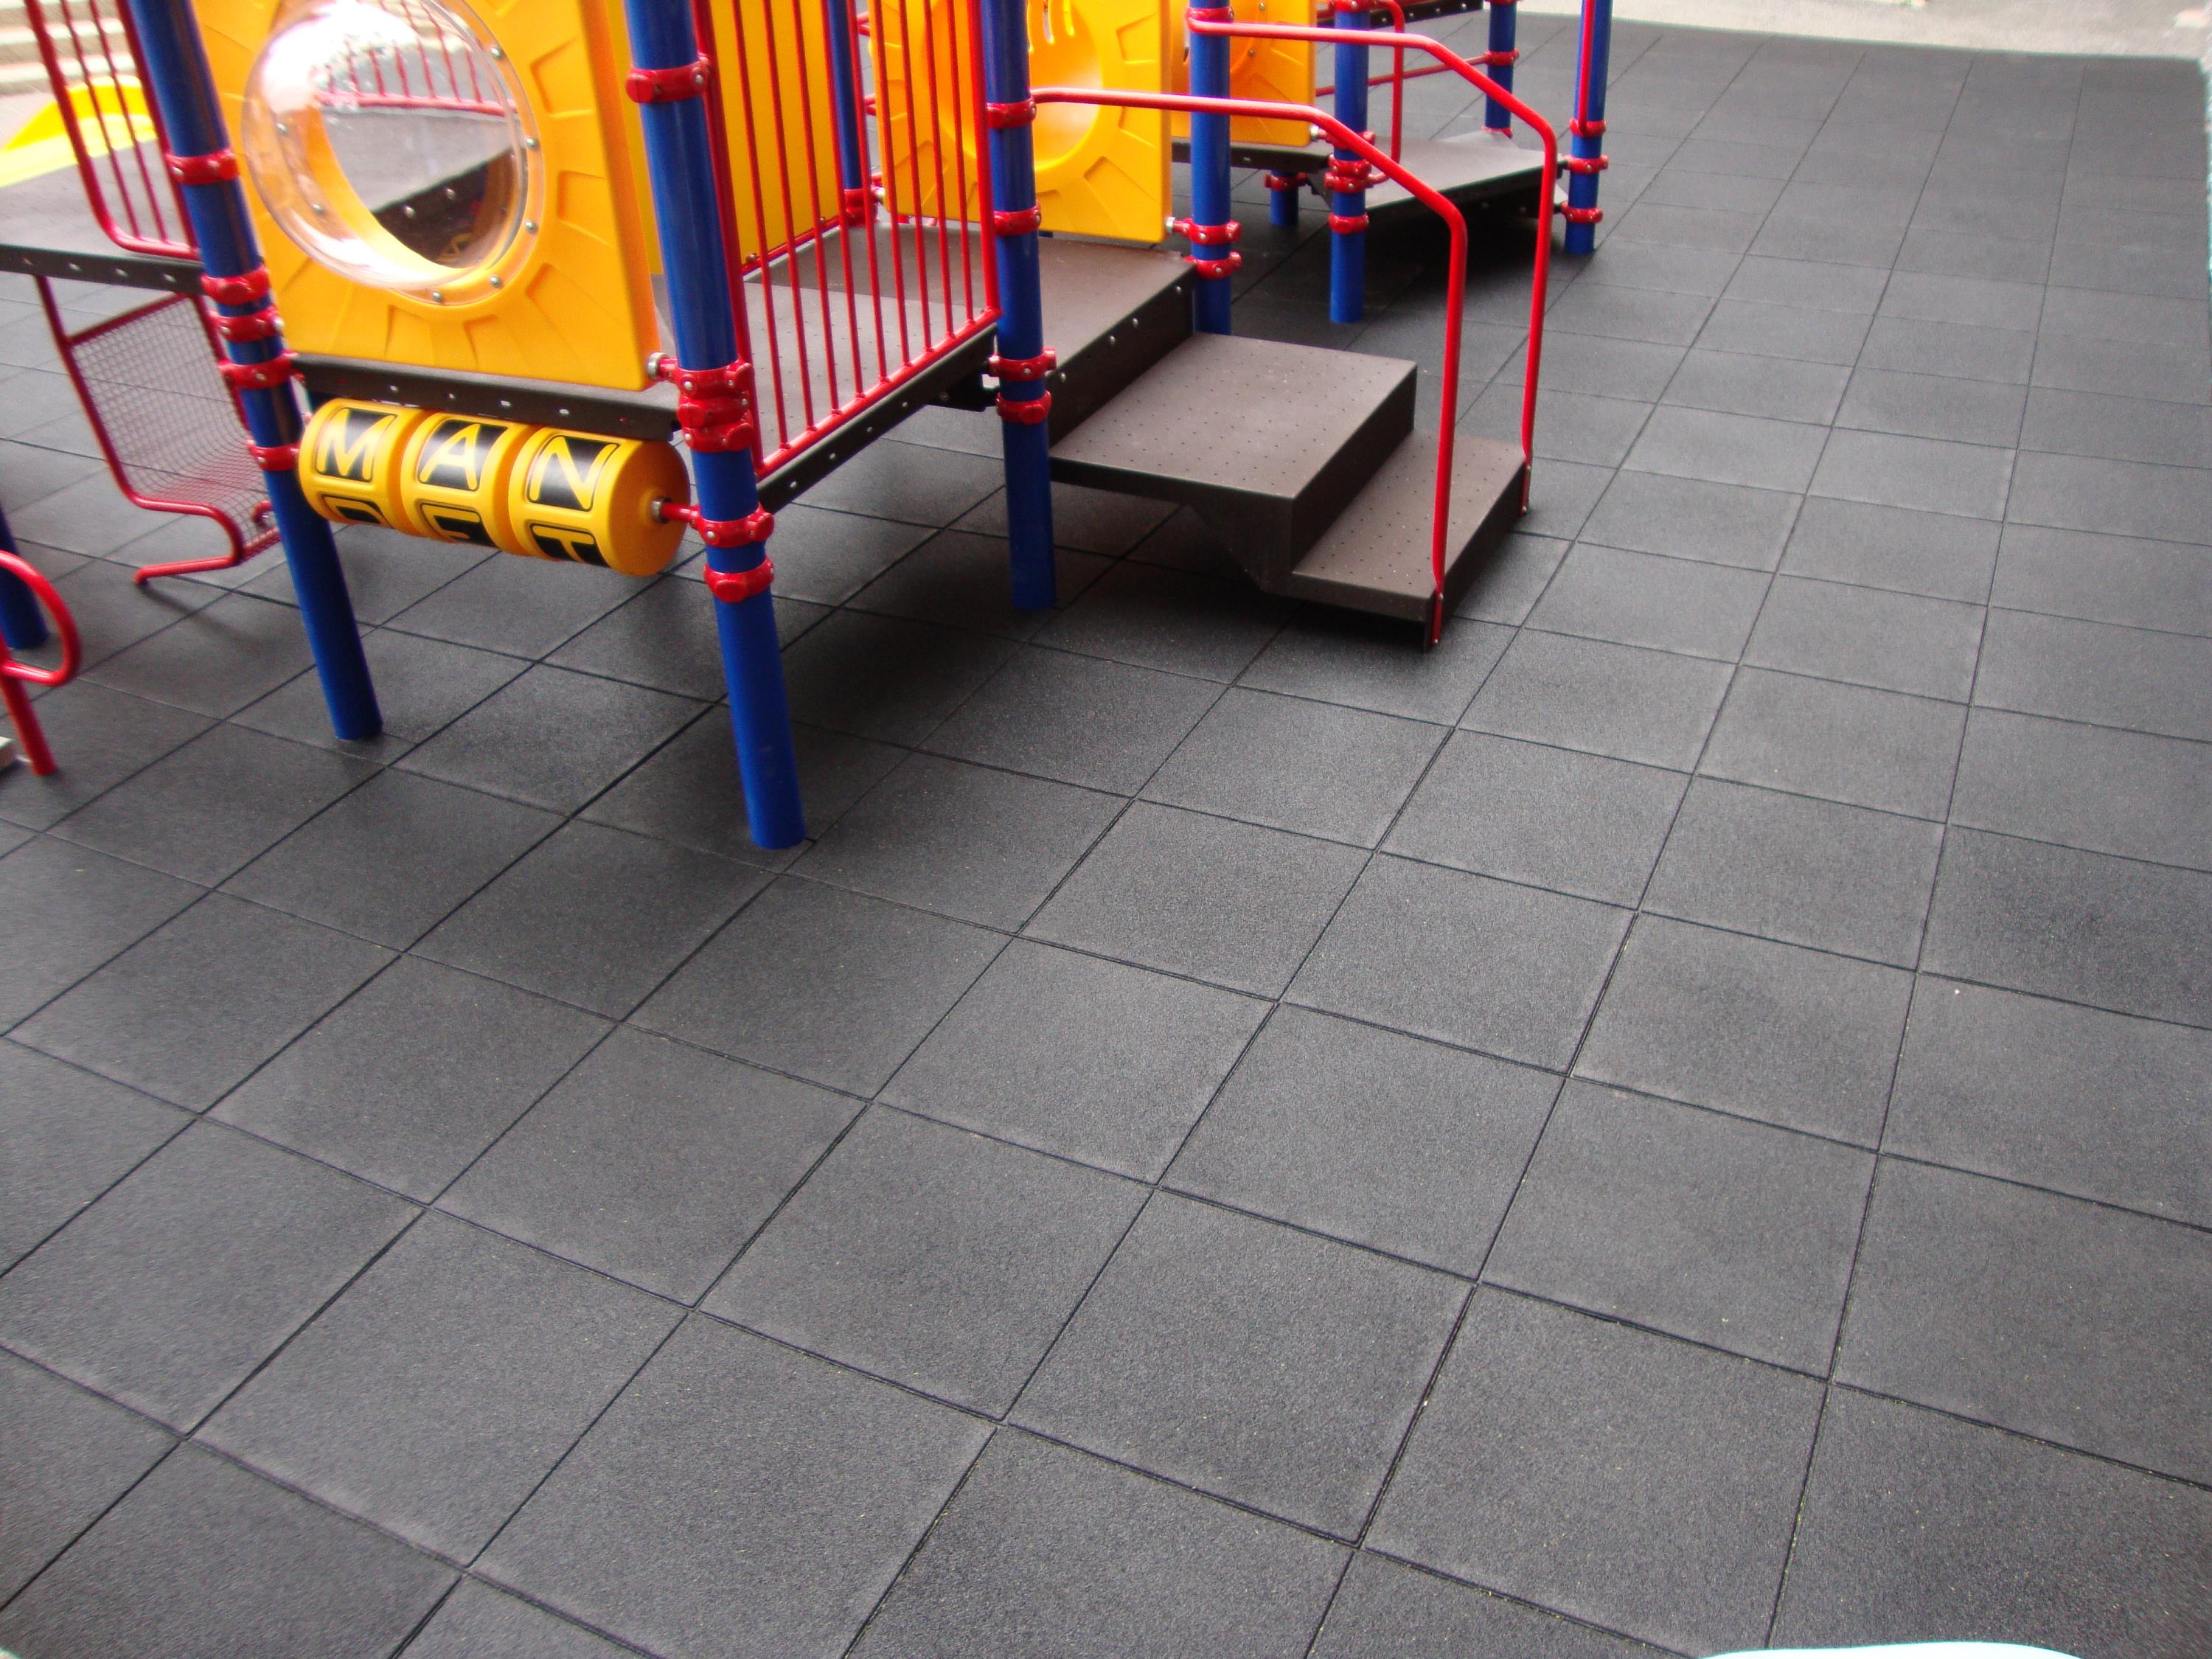 Preschool Playground Tiles - 2 locations j